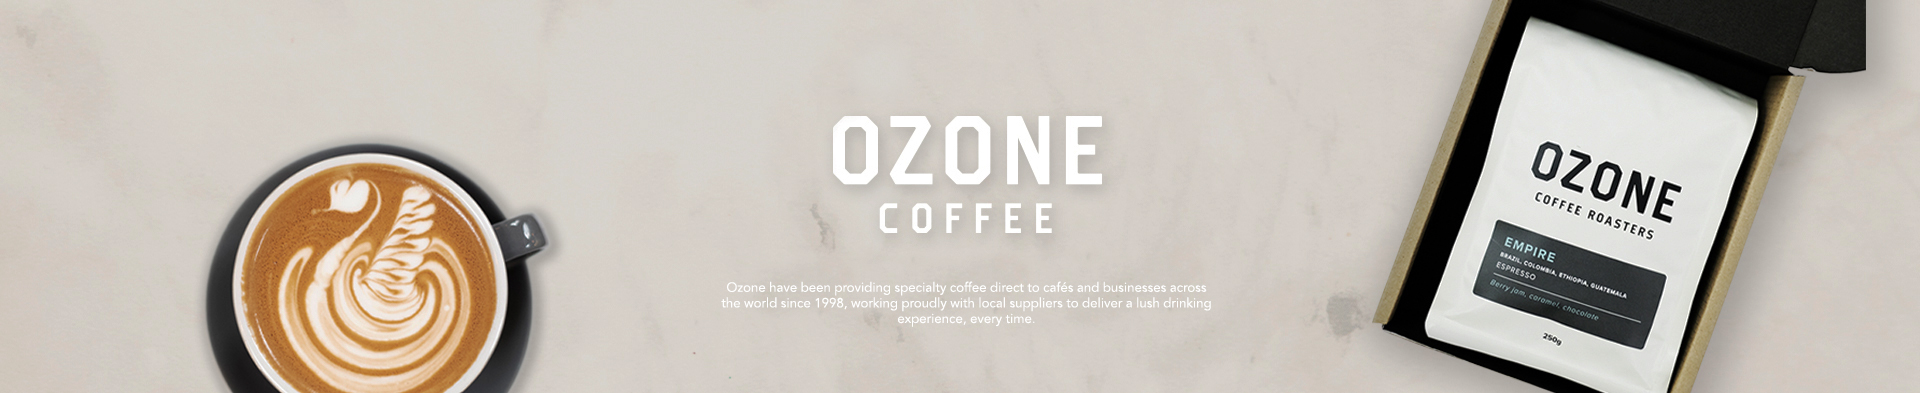 Ozone Coffee Banner